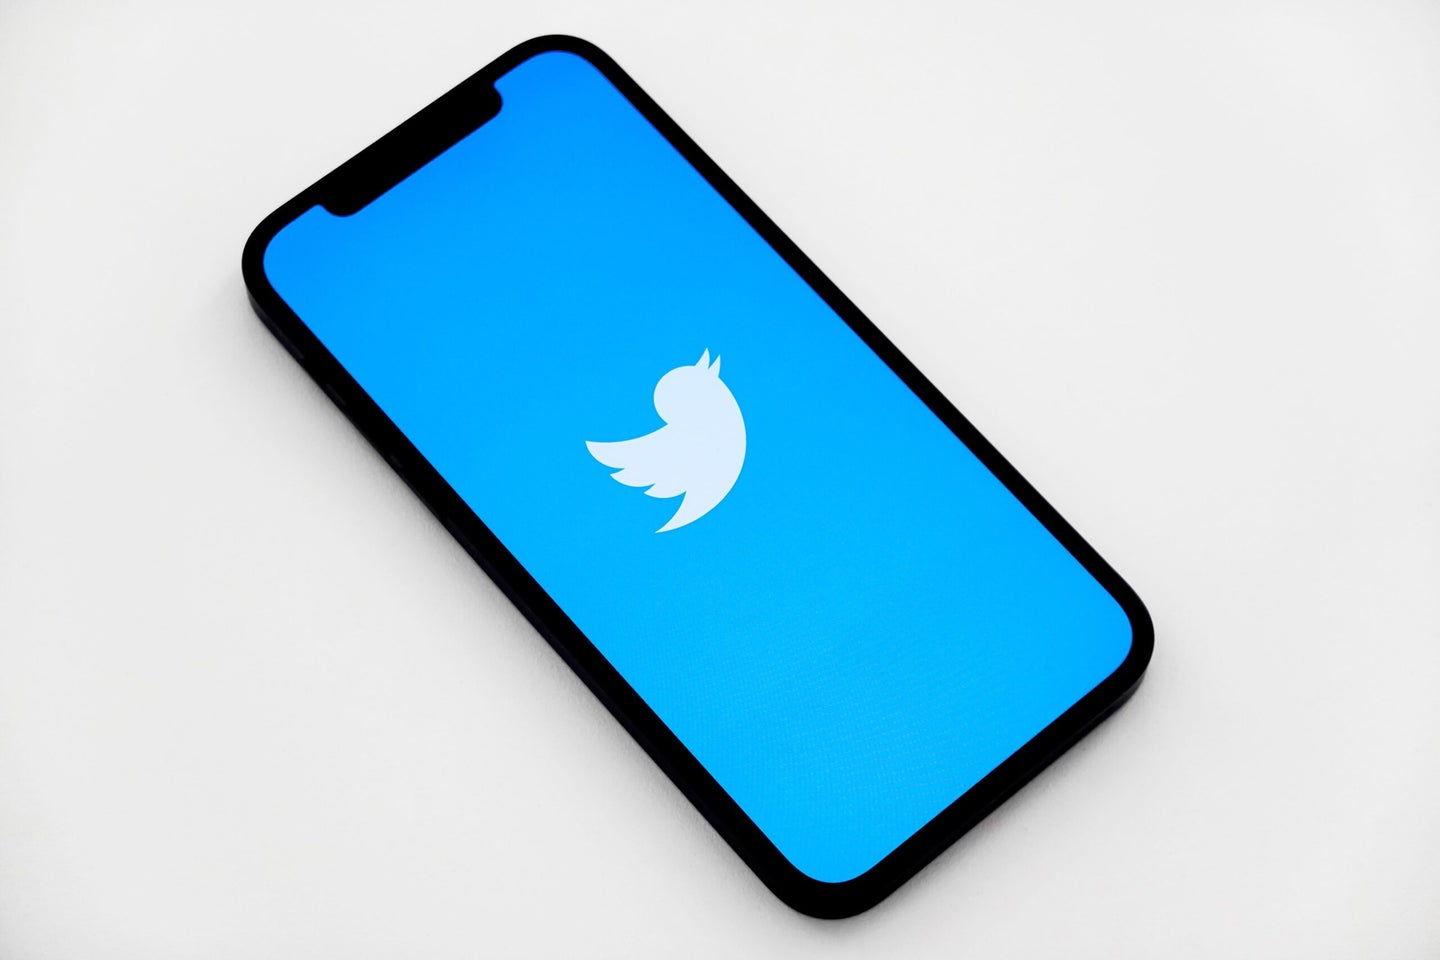 twitter logo on phone screen